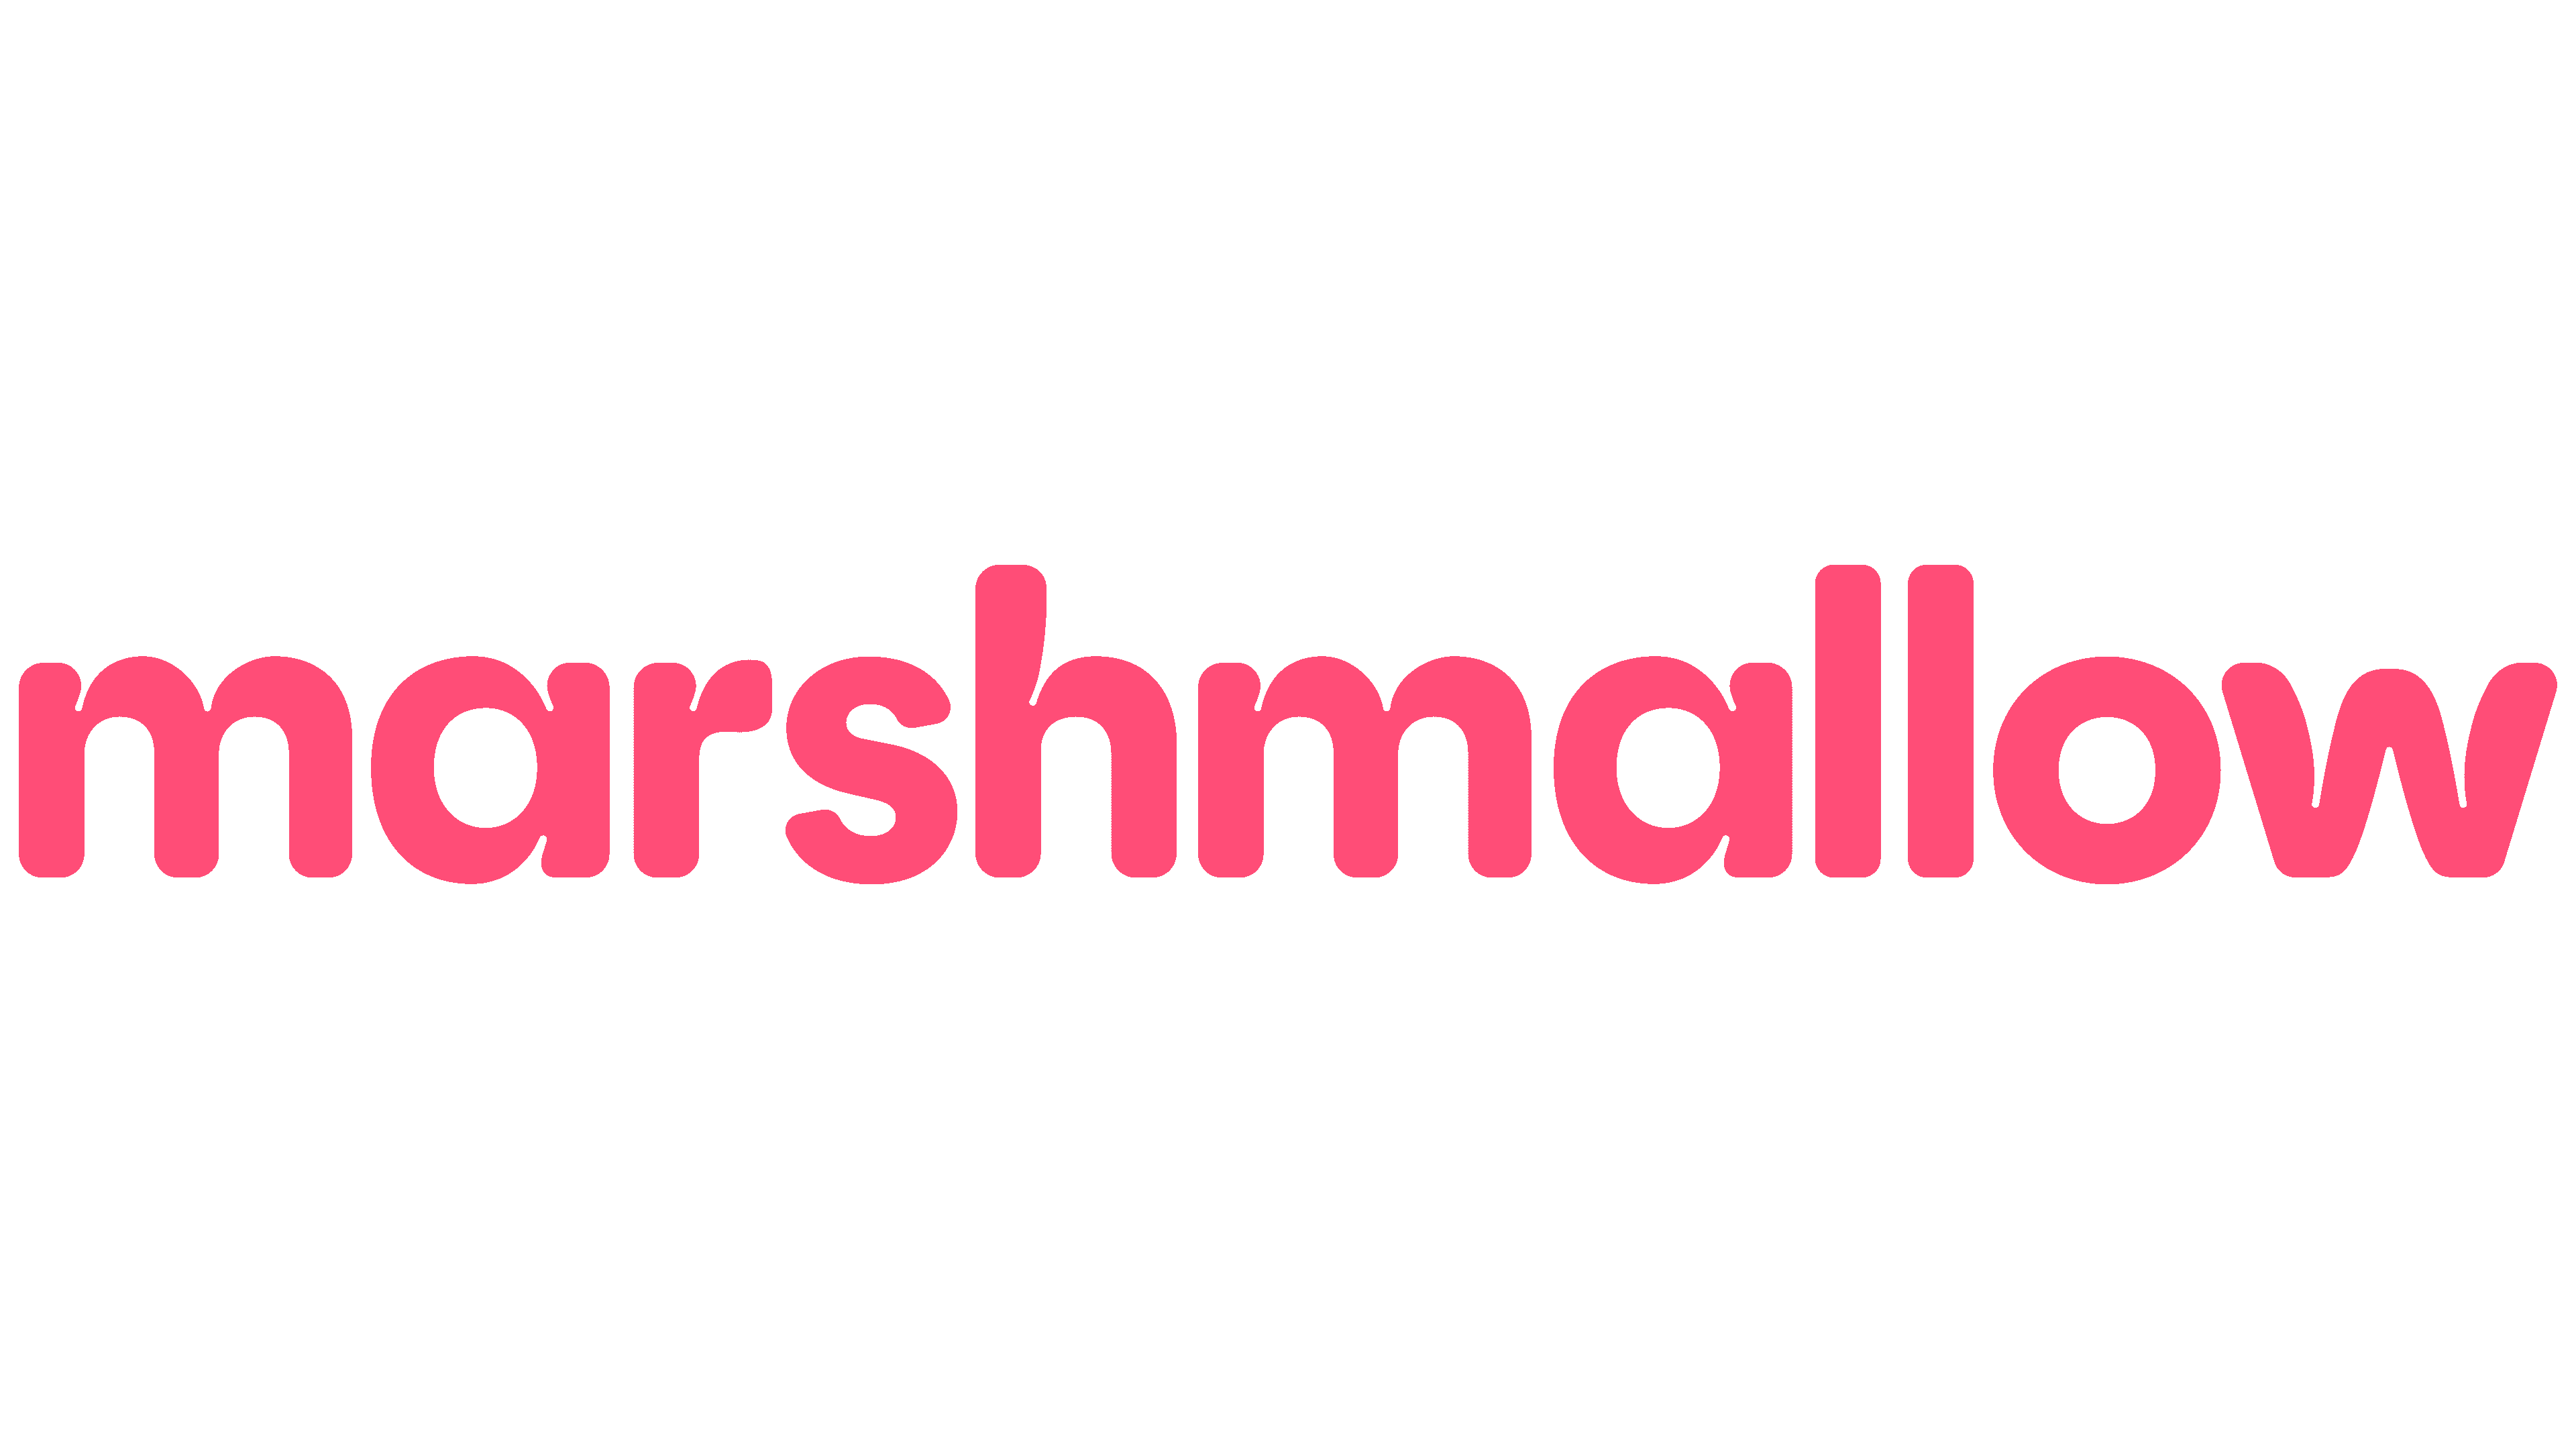 Marshmallow shares rebranding results